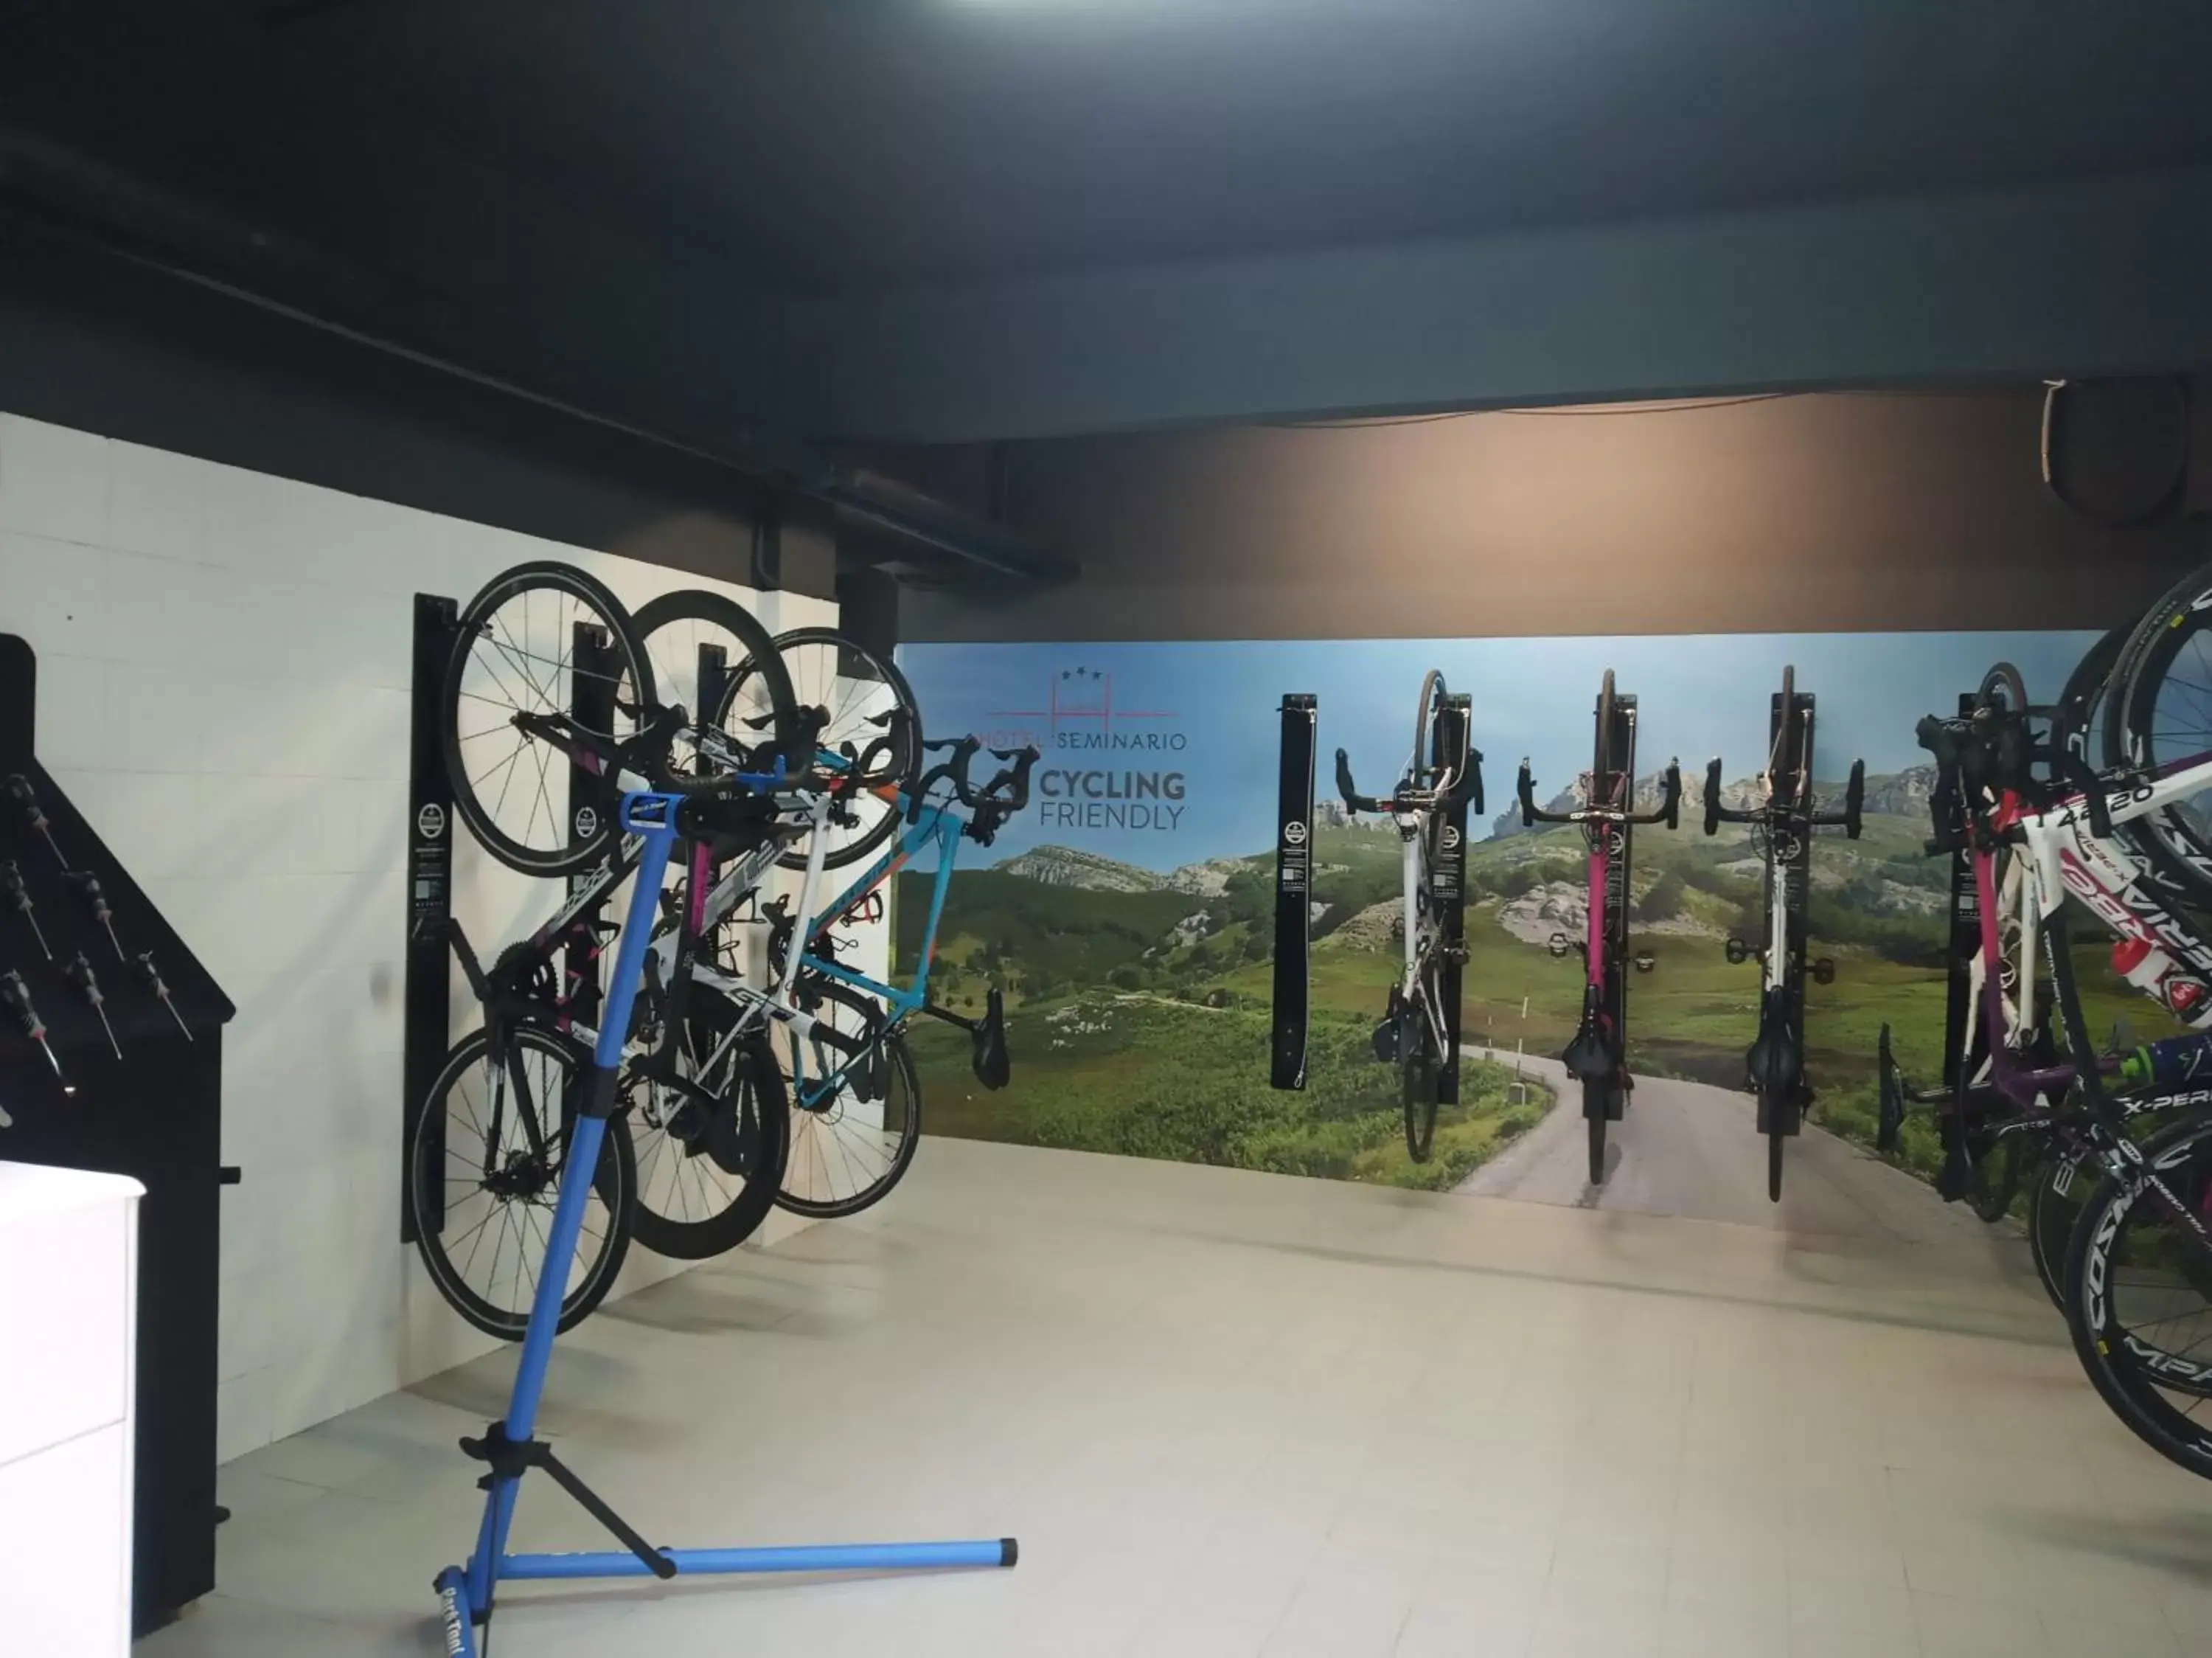 Cycling, Fitness Center/Facilities in Hotel Seminario Aeropuerto Bilbao